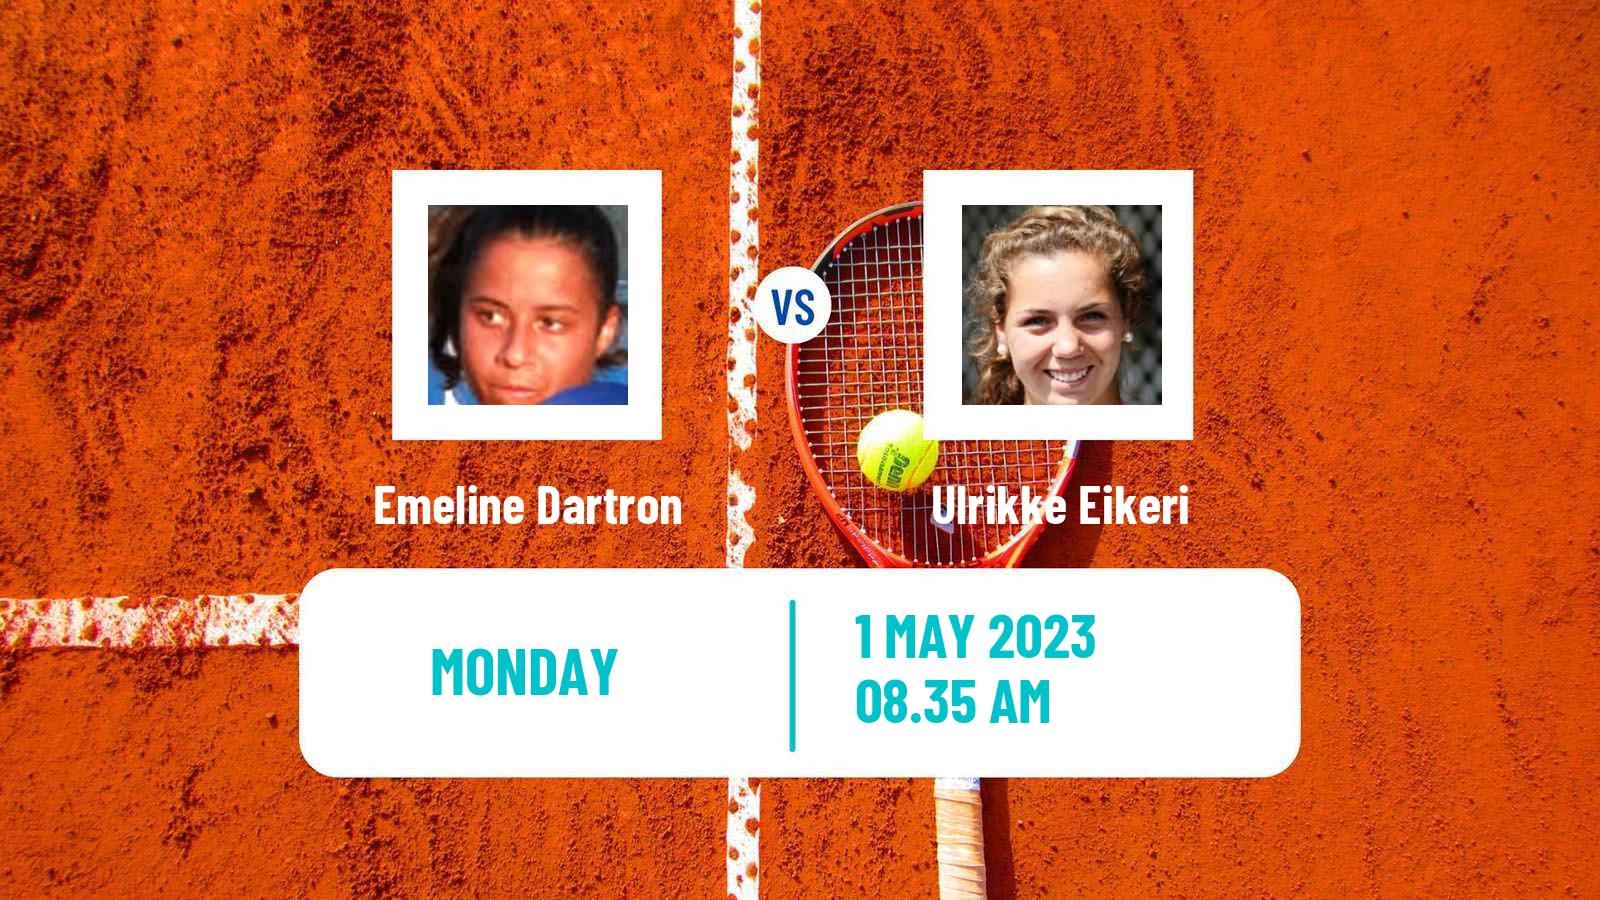 Tennis ATP Challenger Emeline Dartron - Ulrikke Eikeri